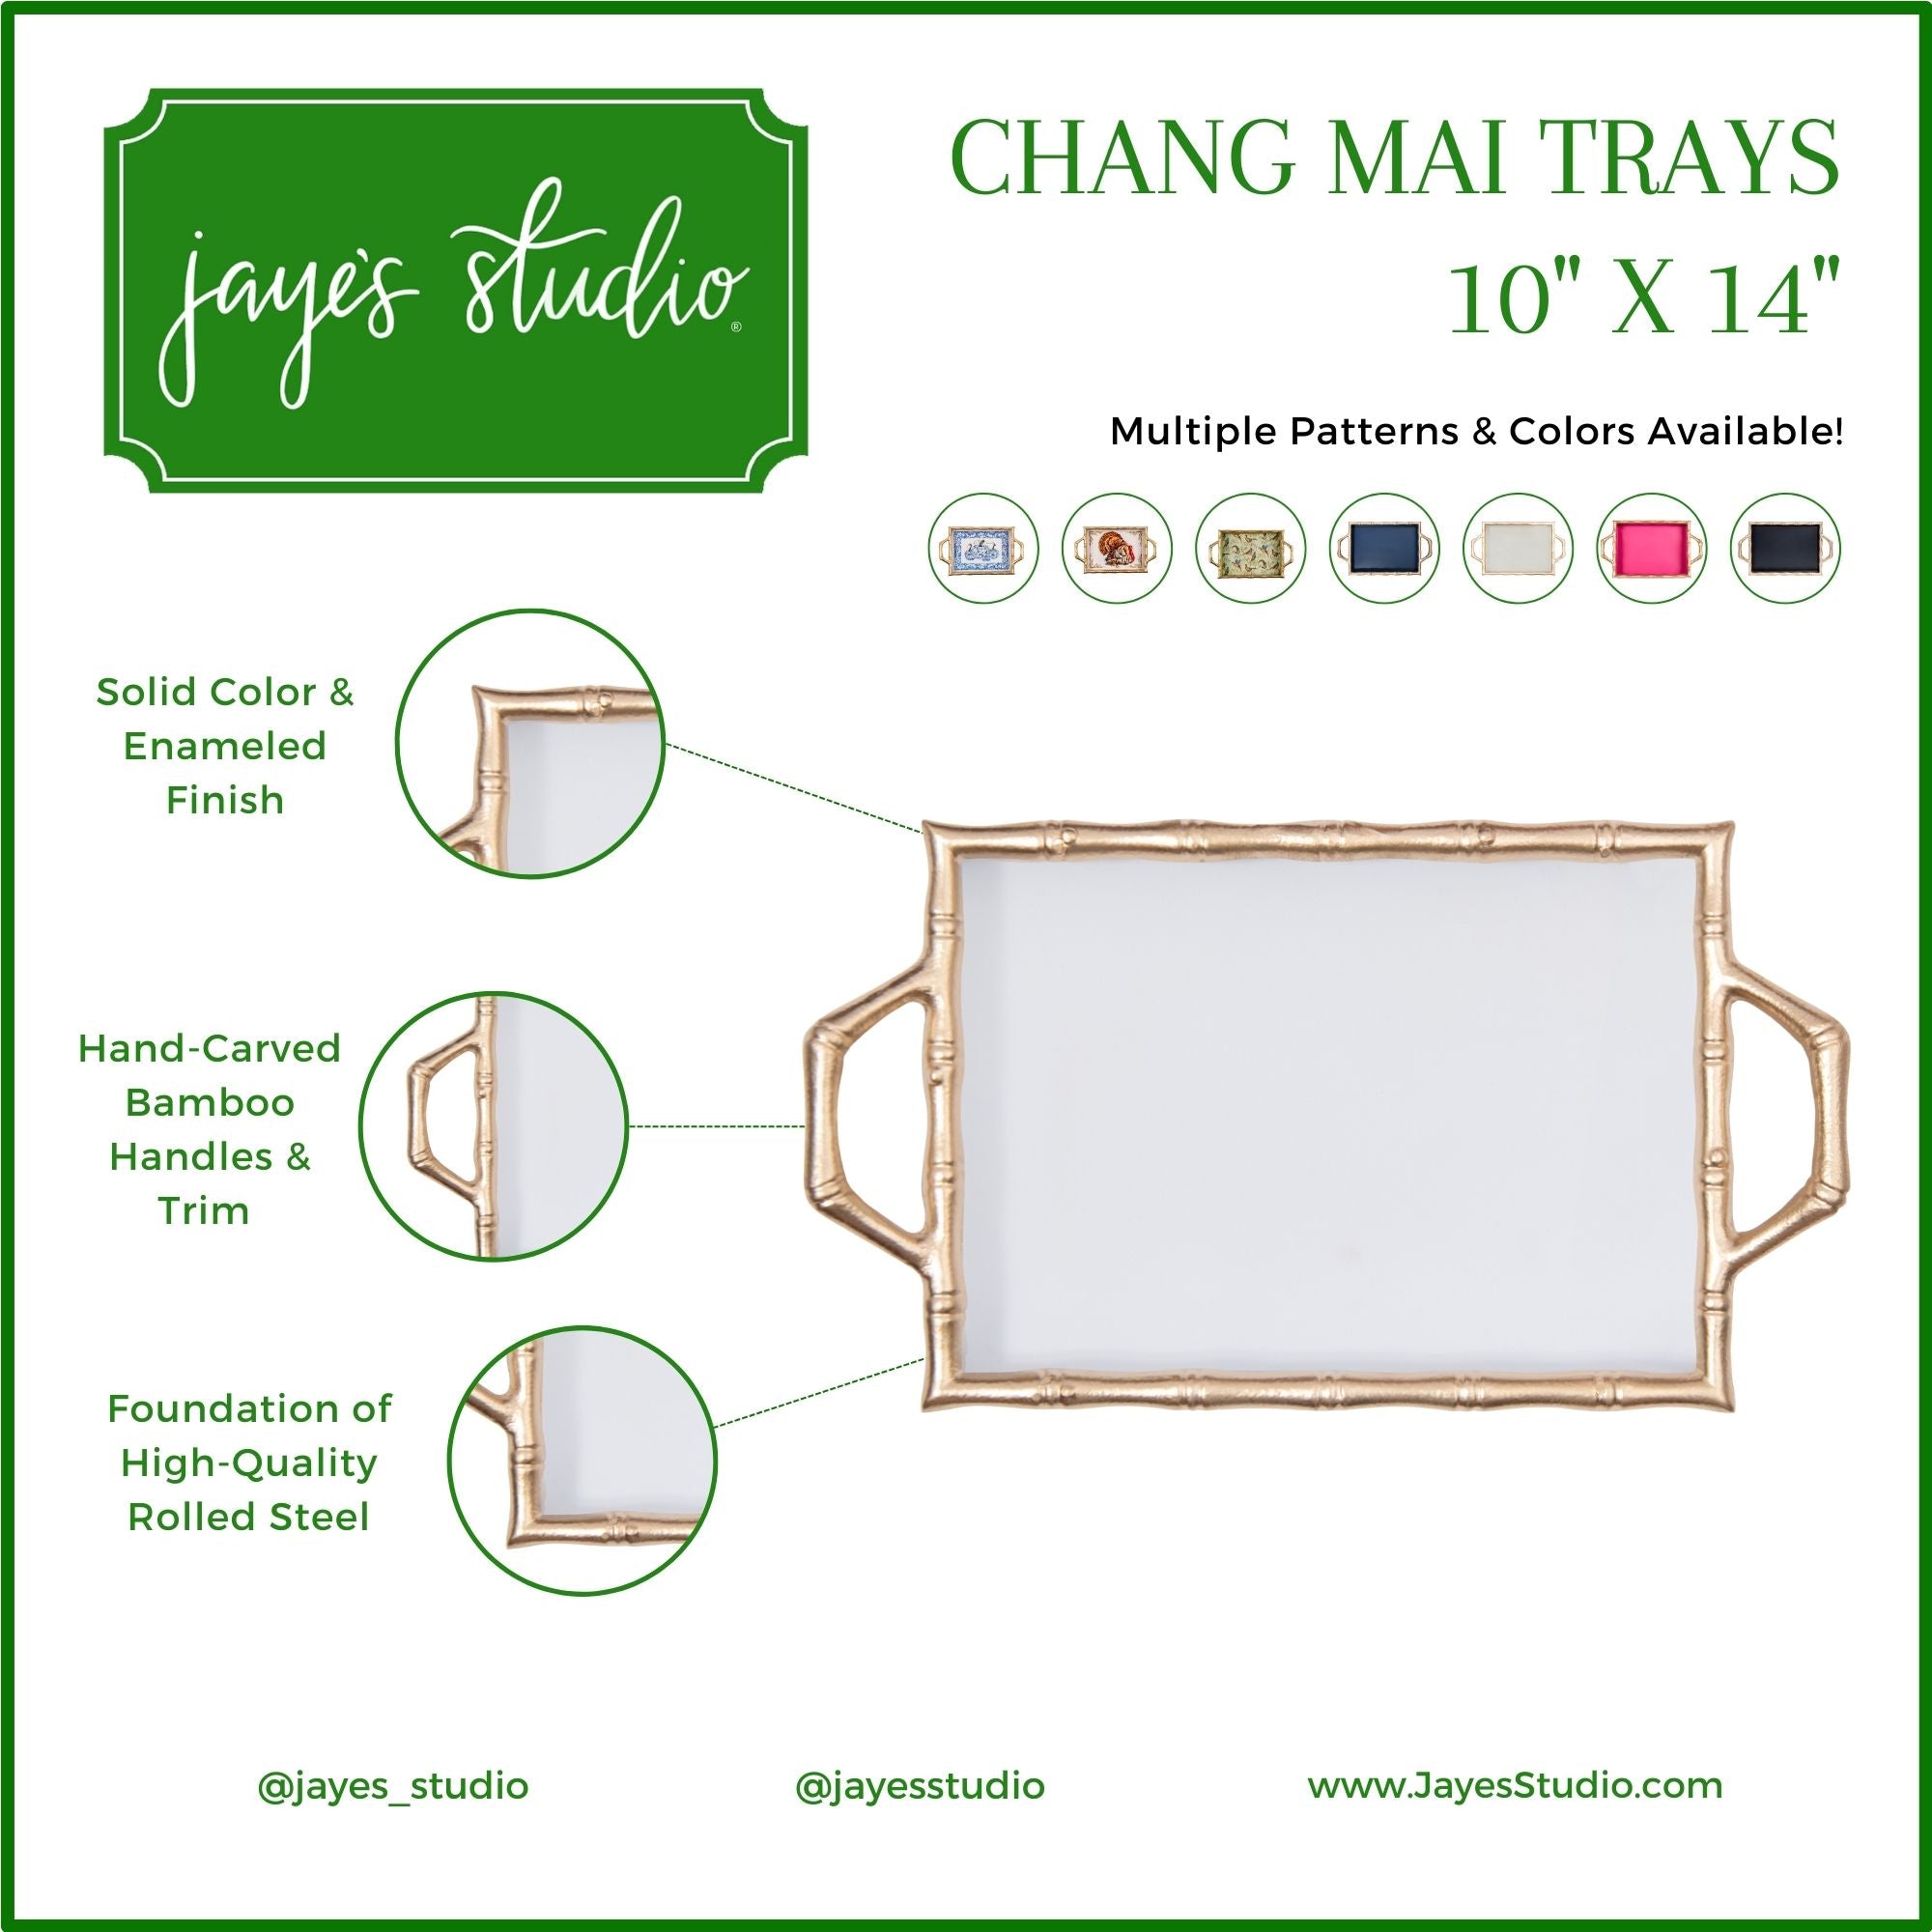 Gracie Chang Mai Tray 10x14